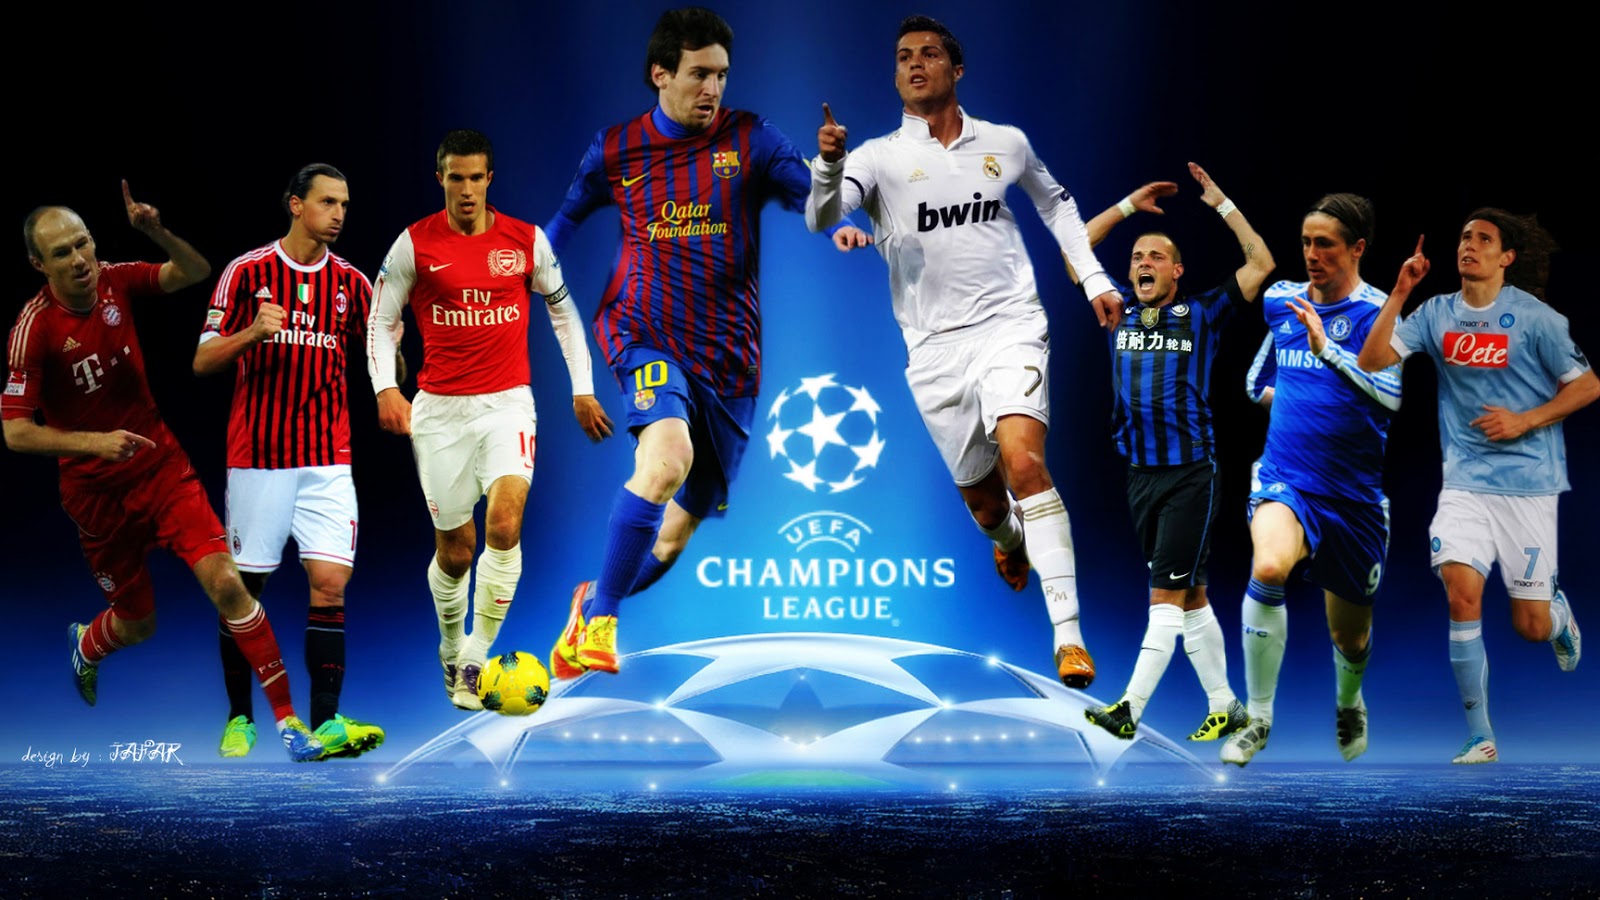 Hendrievans.blogspot.com: UEFA Champions League wallpaper 2013